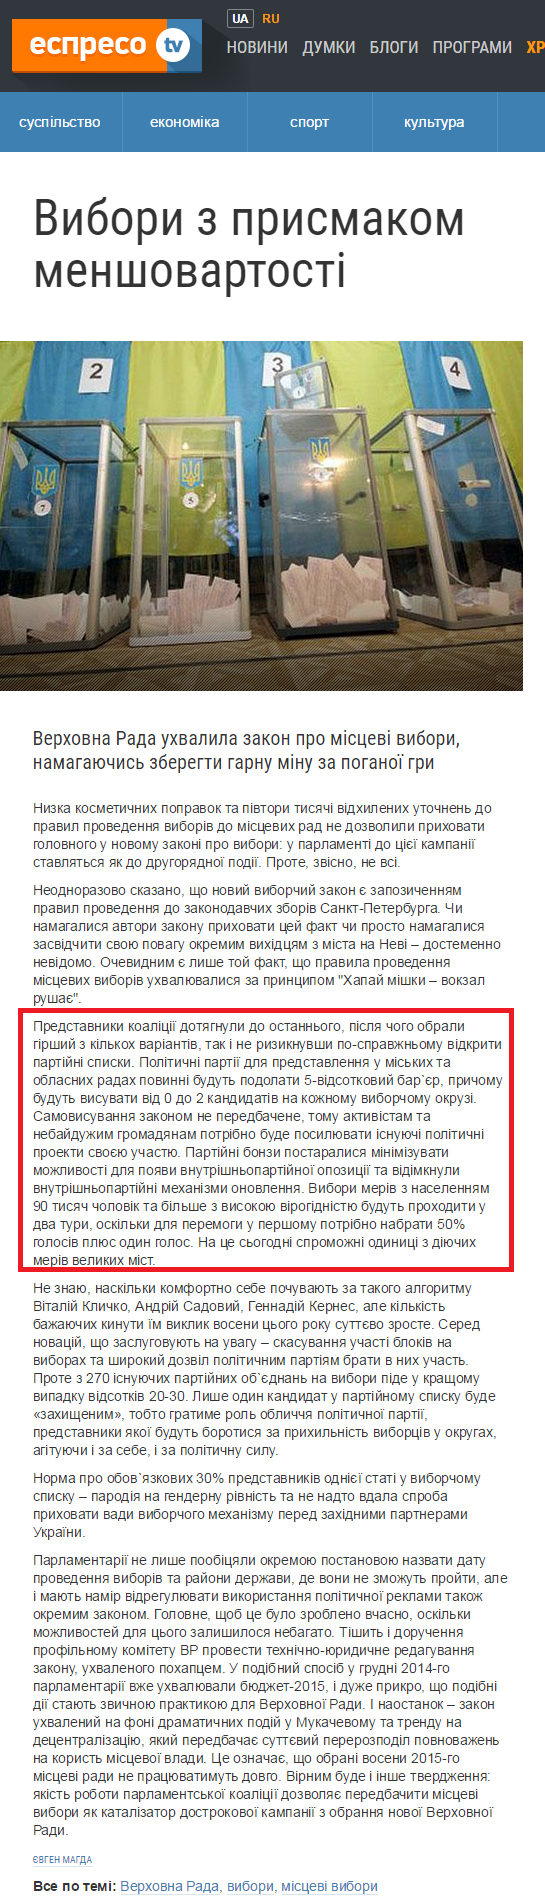 http://espreso.tv/article/2015/07/15/vybory_z_prysmakom_menshovartosti